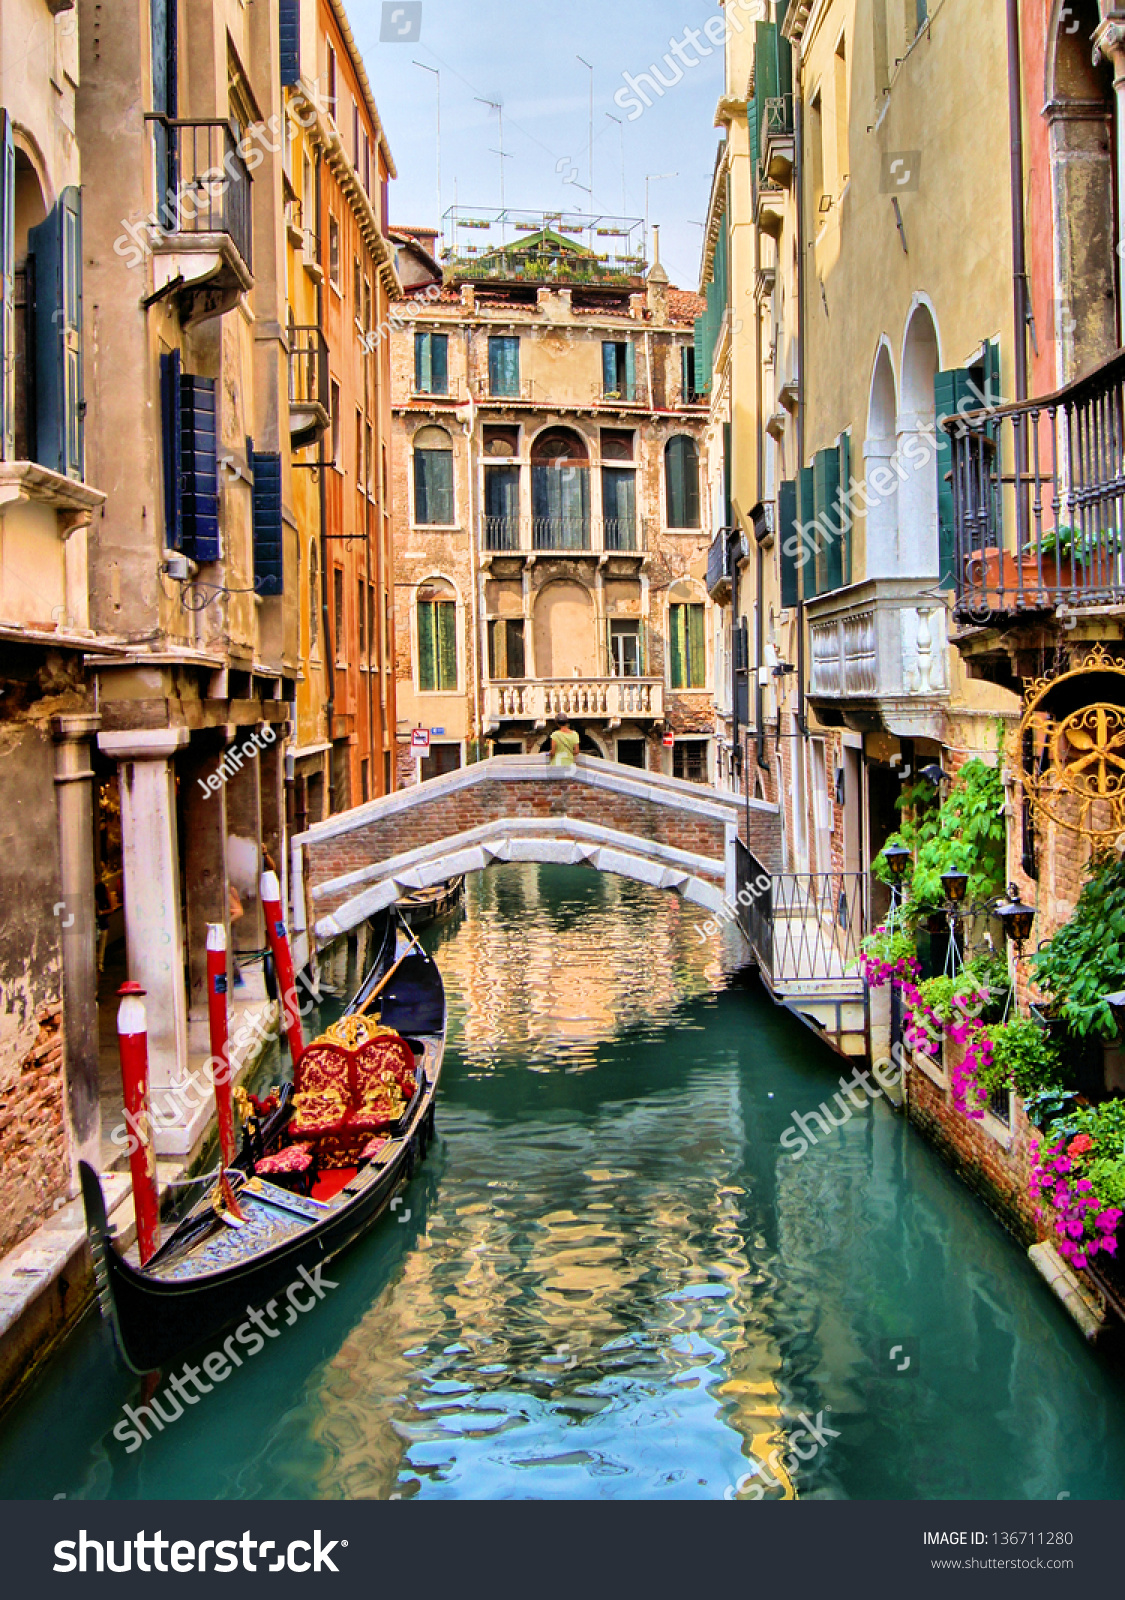 Scenic canal with gondola, Venice, Italy #136711280